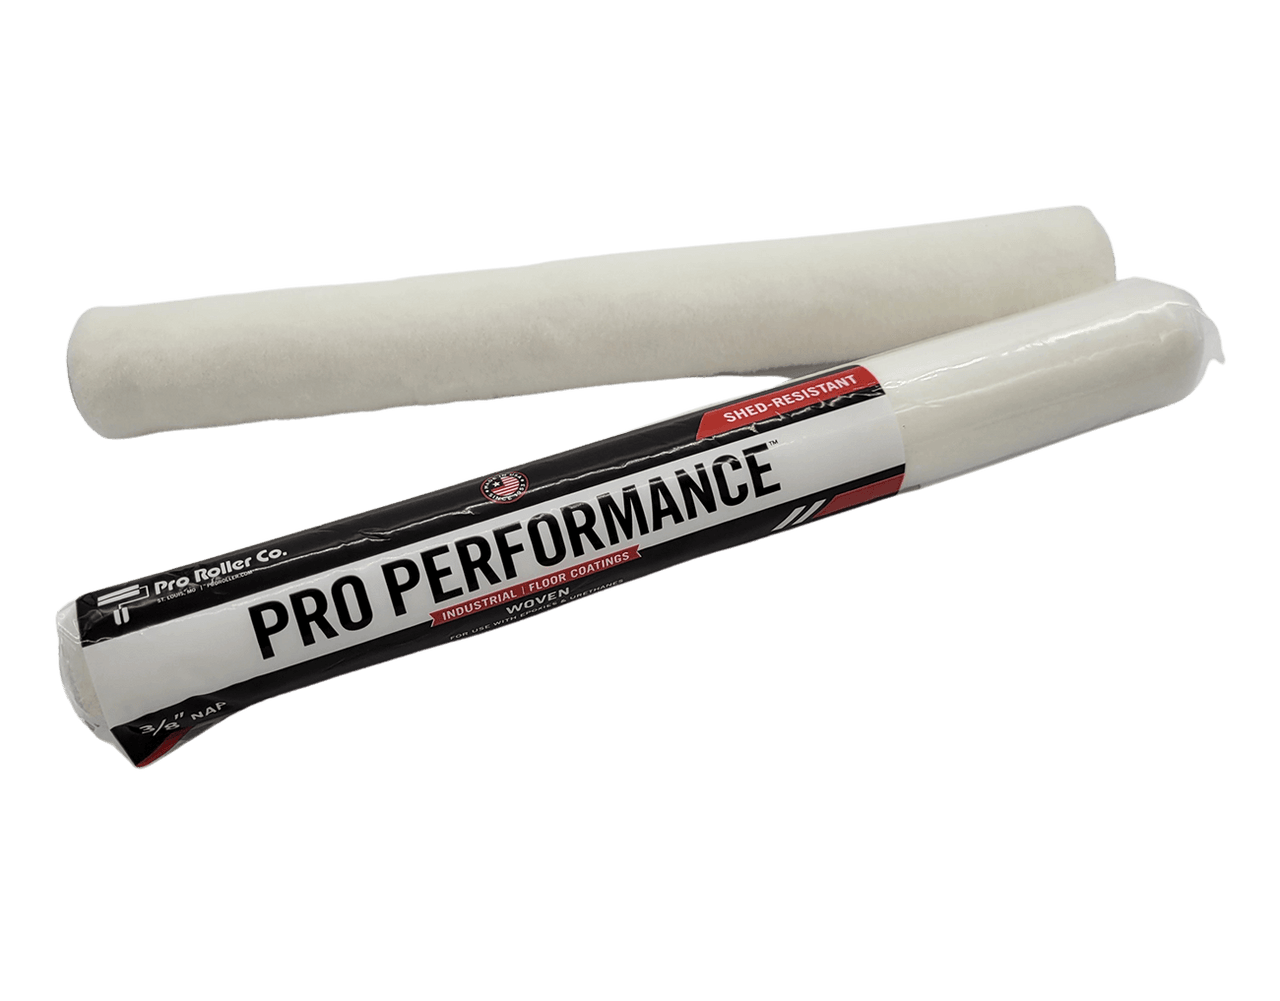 18" Pro Performance Roller